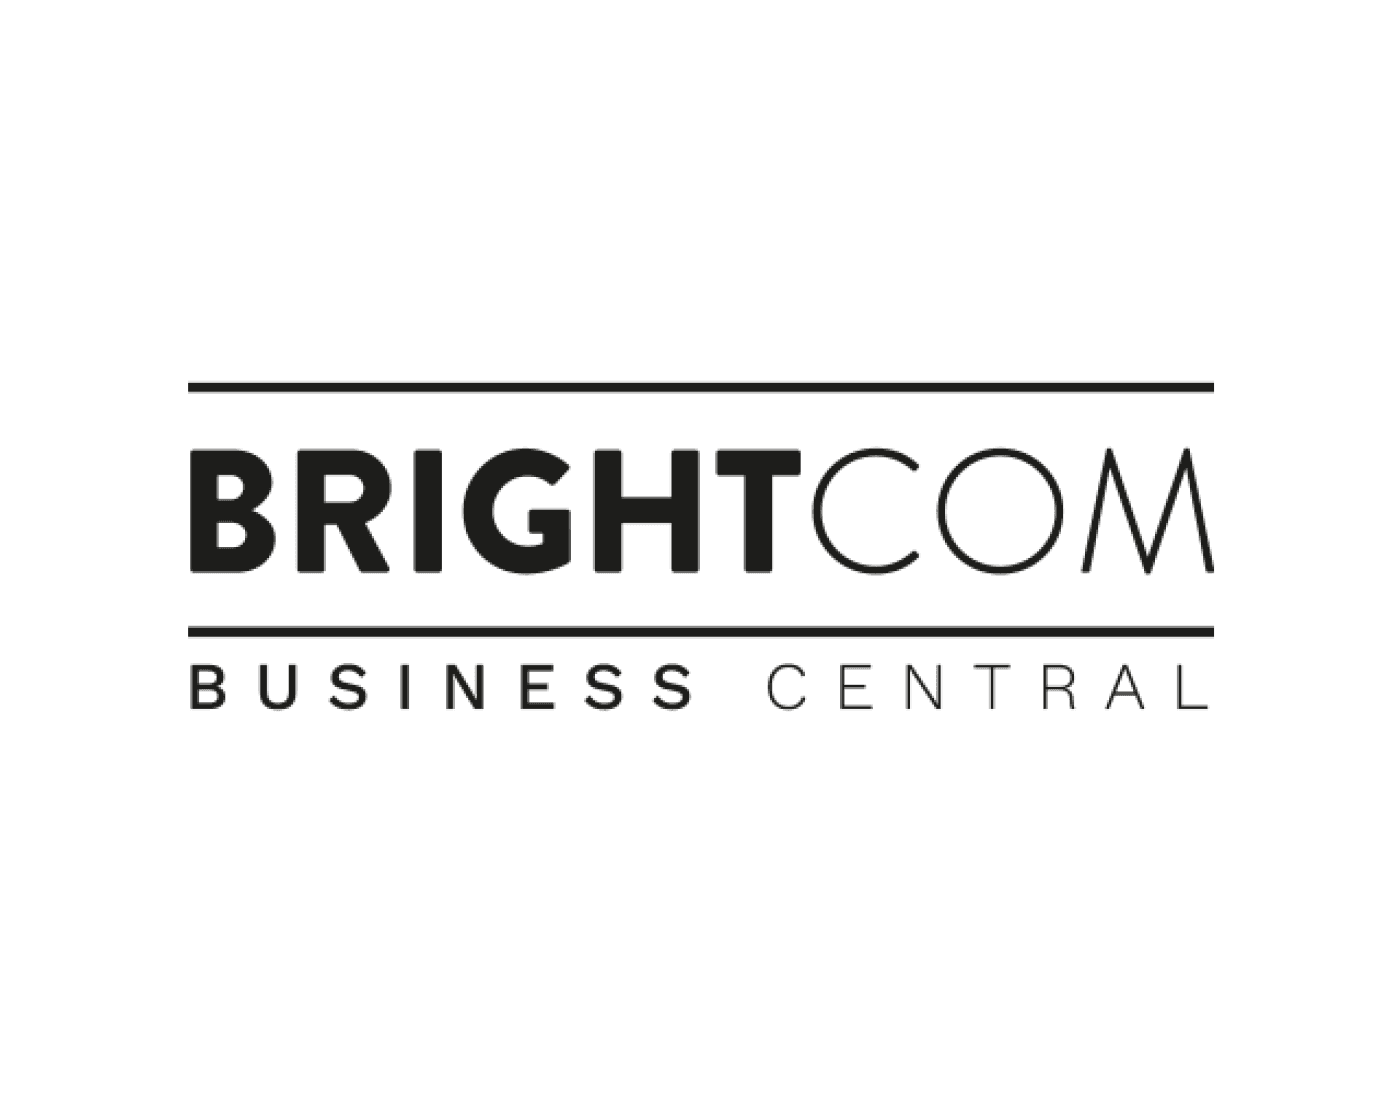 brightcom-logo-640x500-01.png